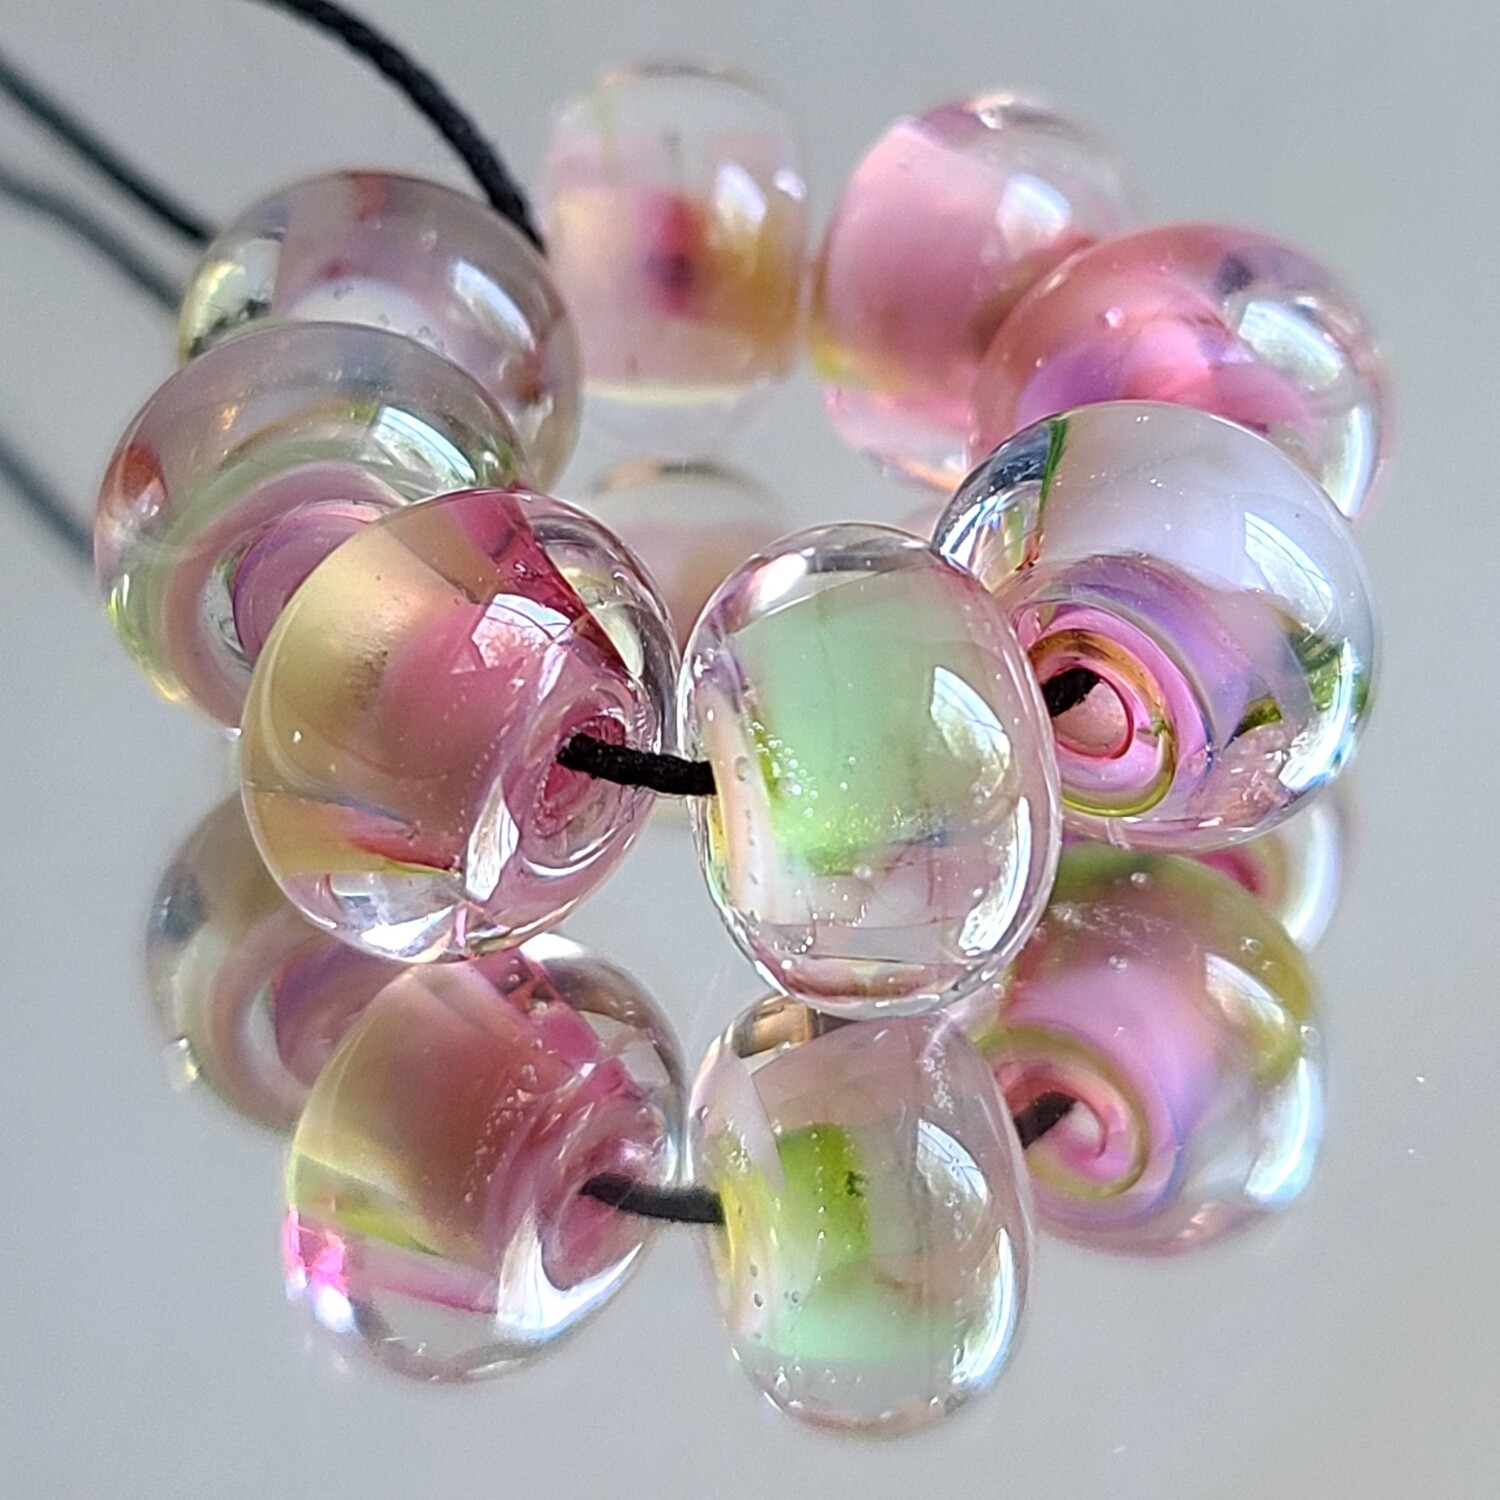 Peaceful Pond Handmade Lampwork Beads